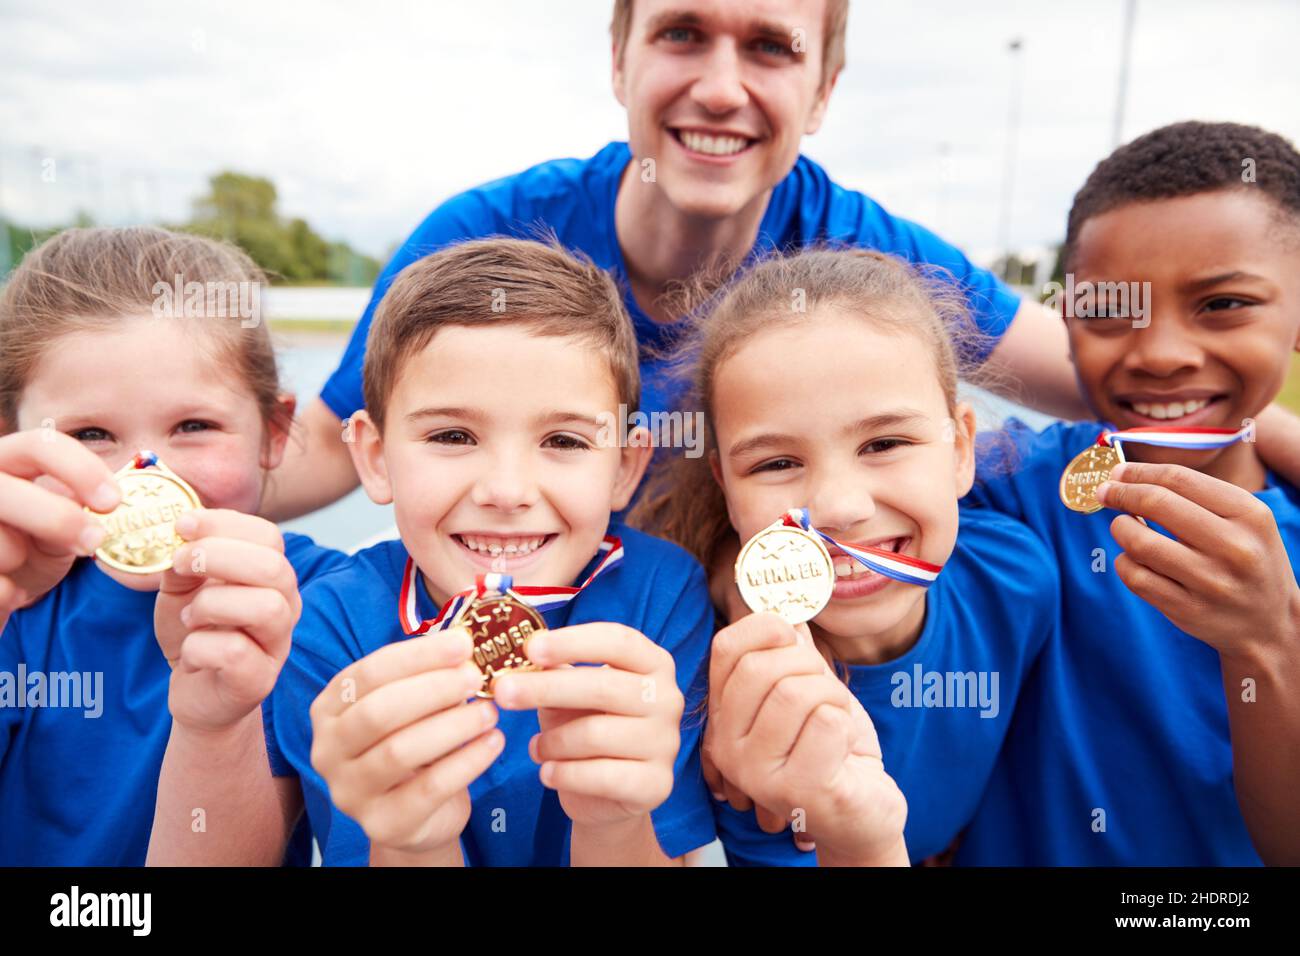 winners, joy, team, medal, winner, happiness, joys, teams, medals Stock Photo